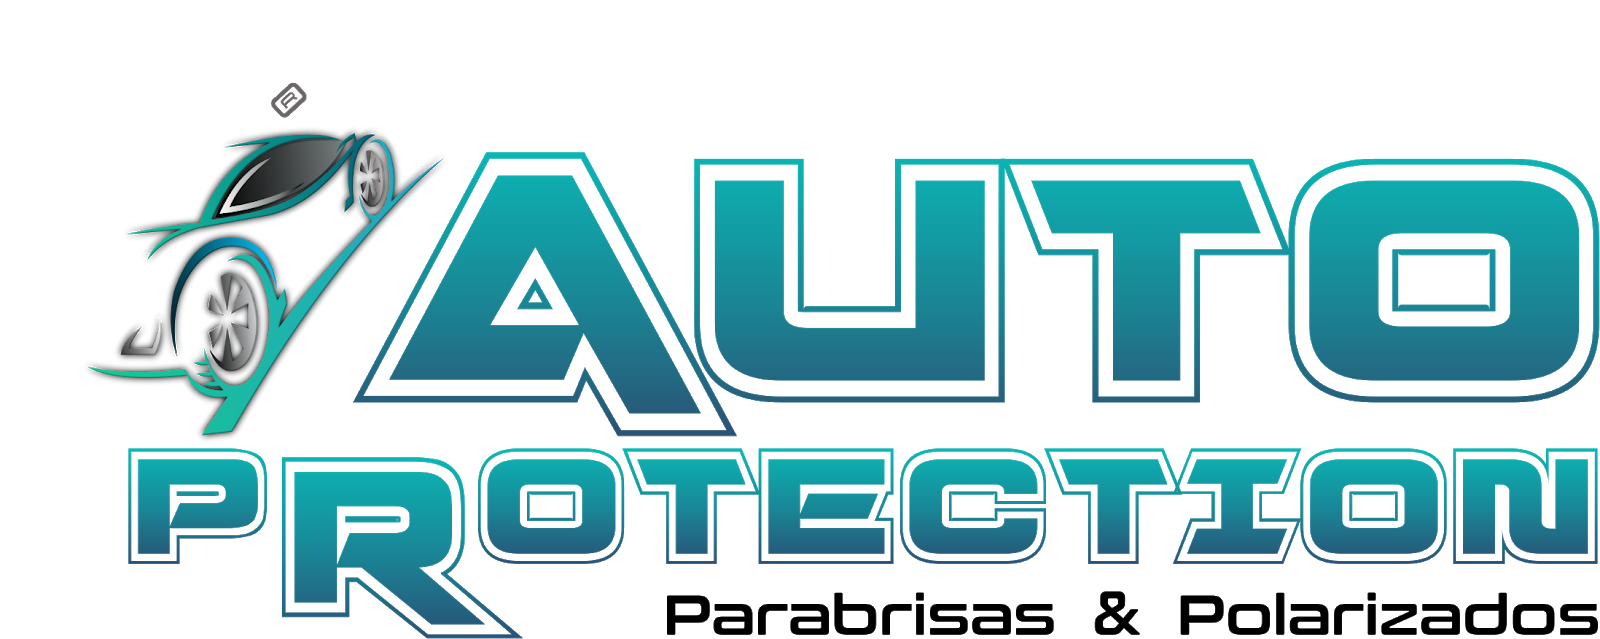 Auto Protection Blog